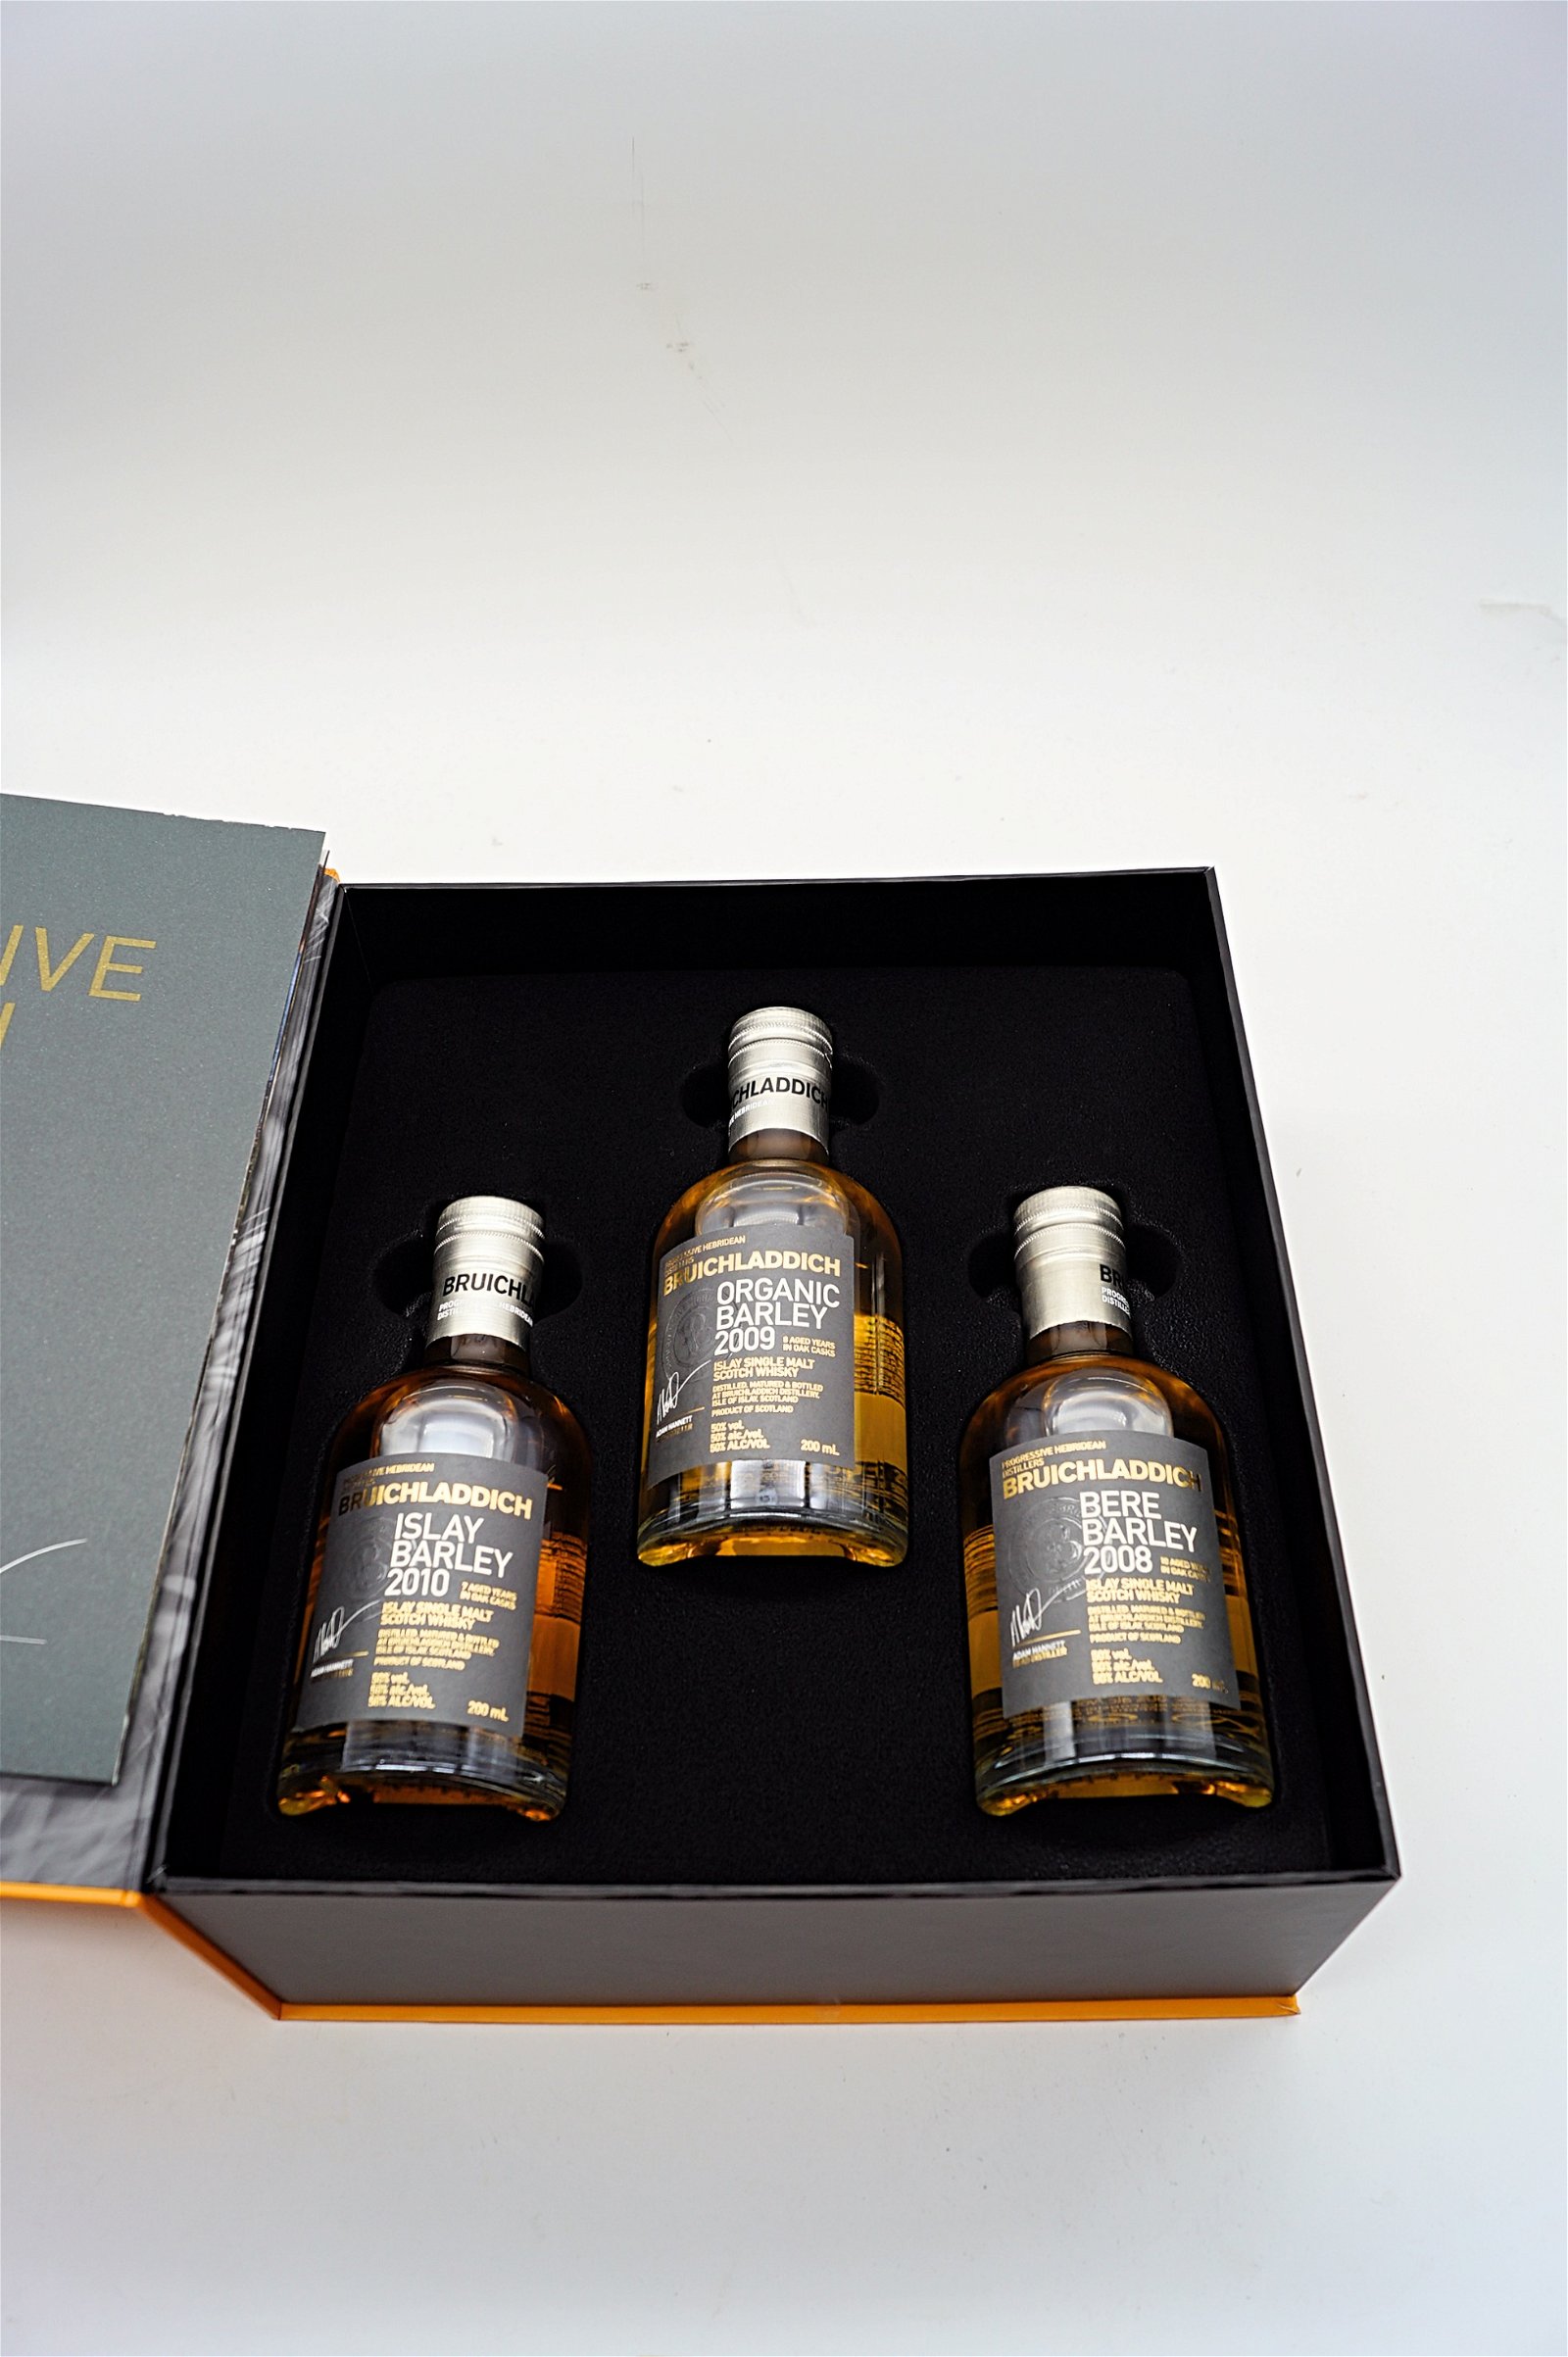 Bruichladdich Barley Exploration Collection Islay Single Malt Scotch Whisky (3x200ml)